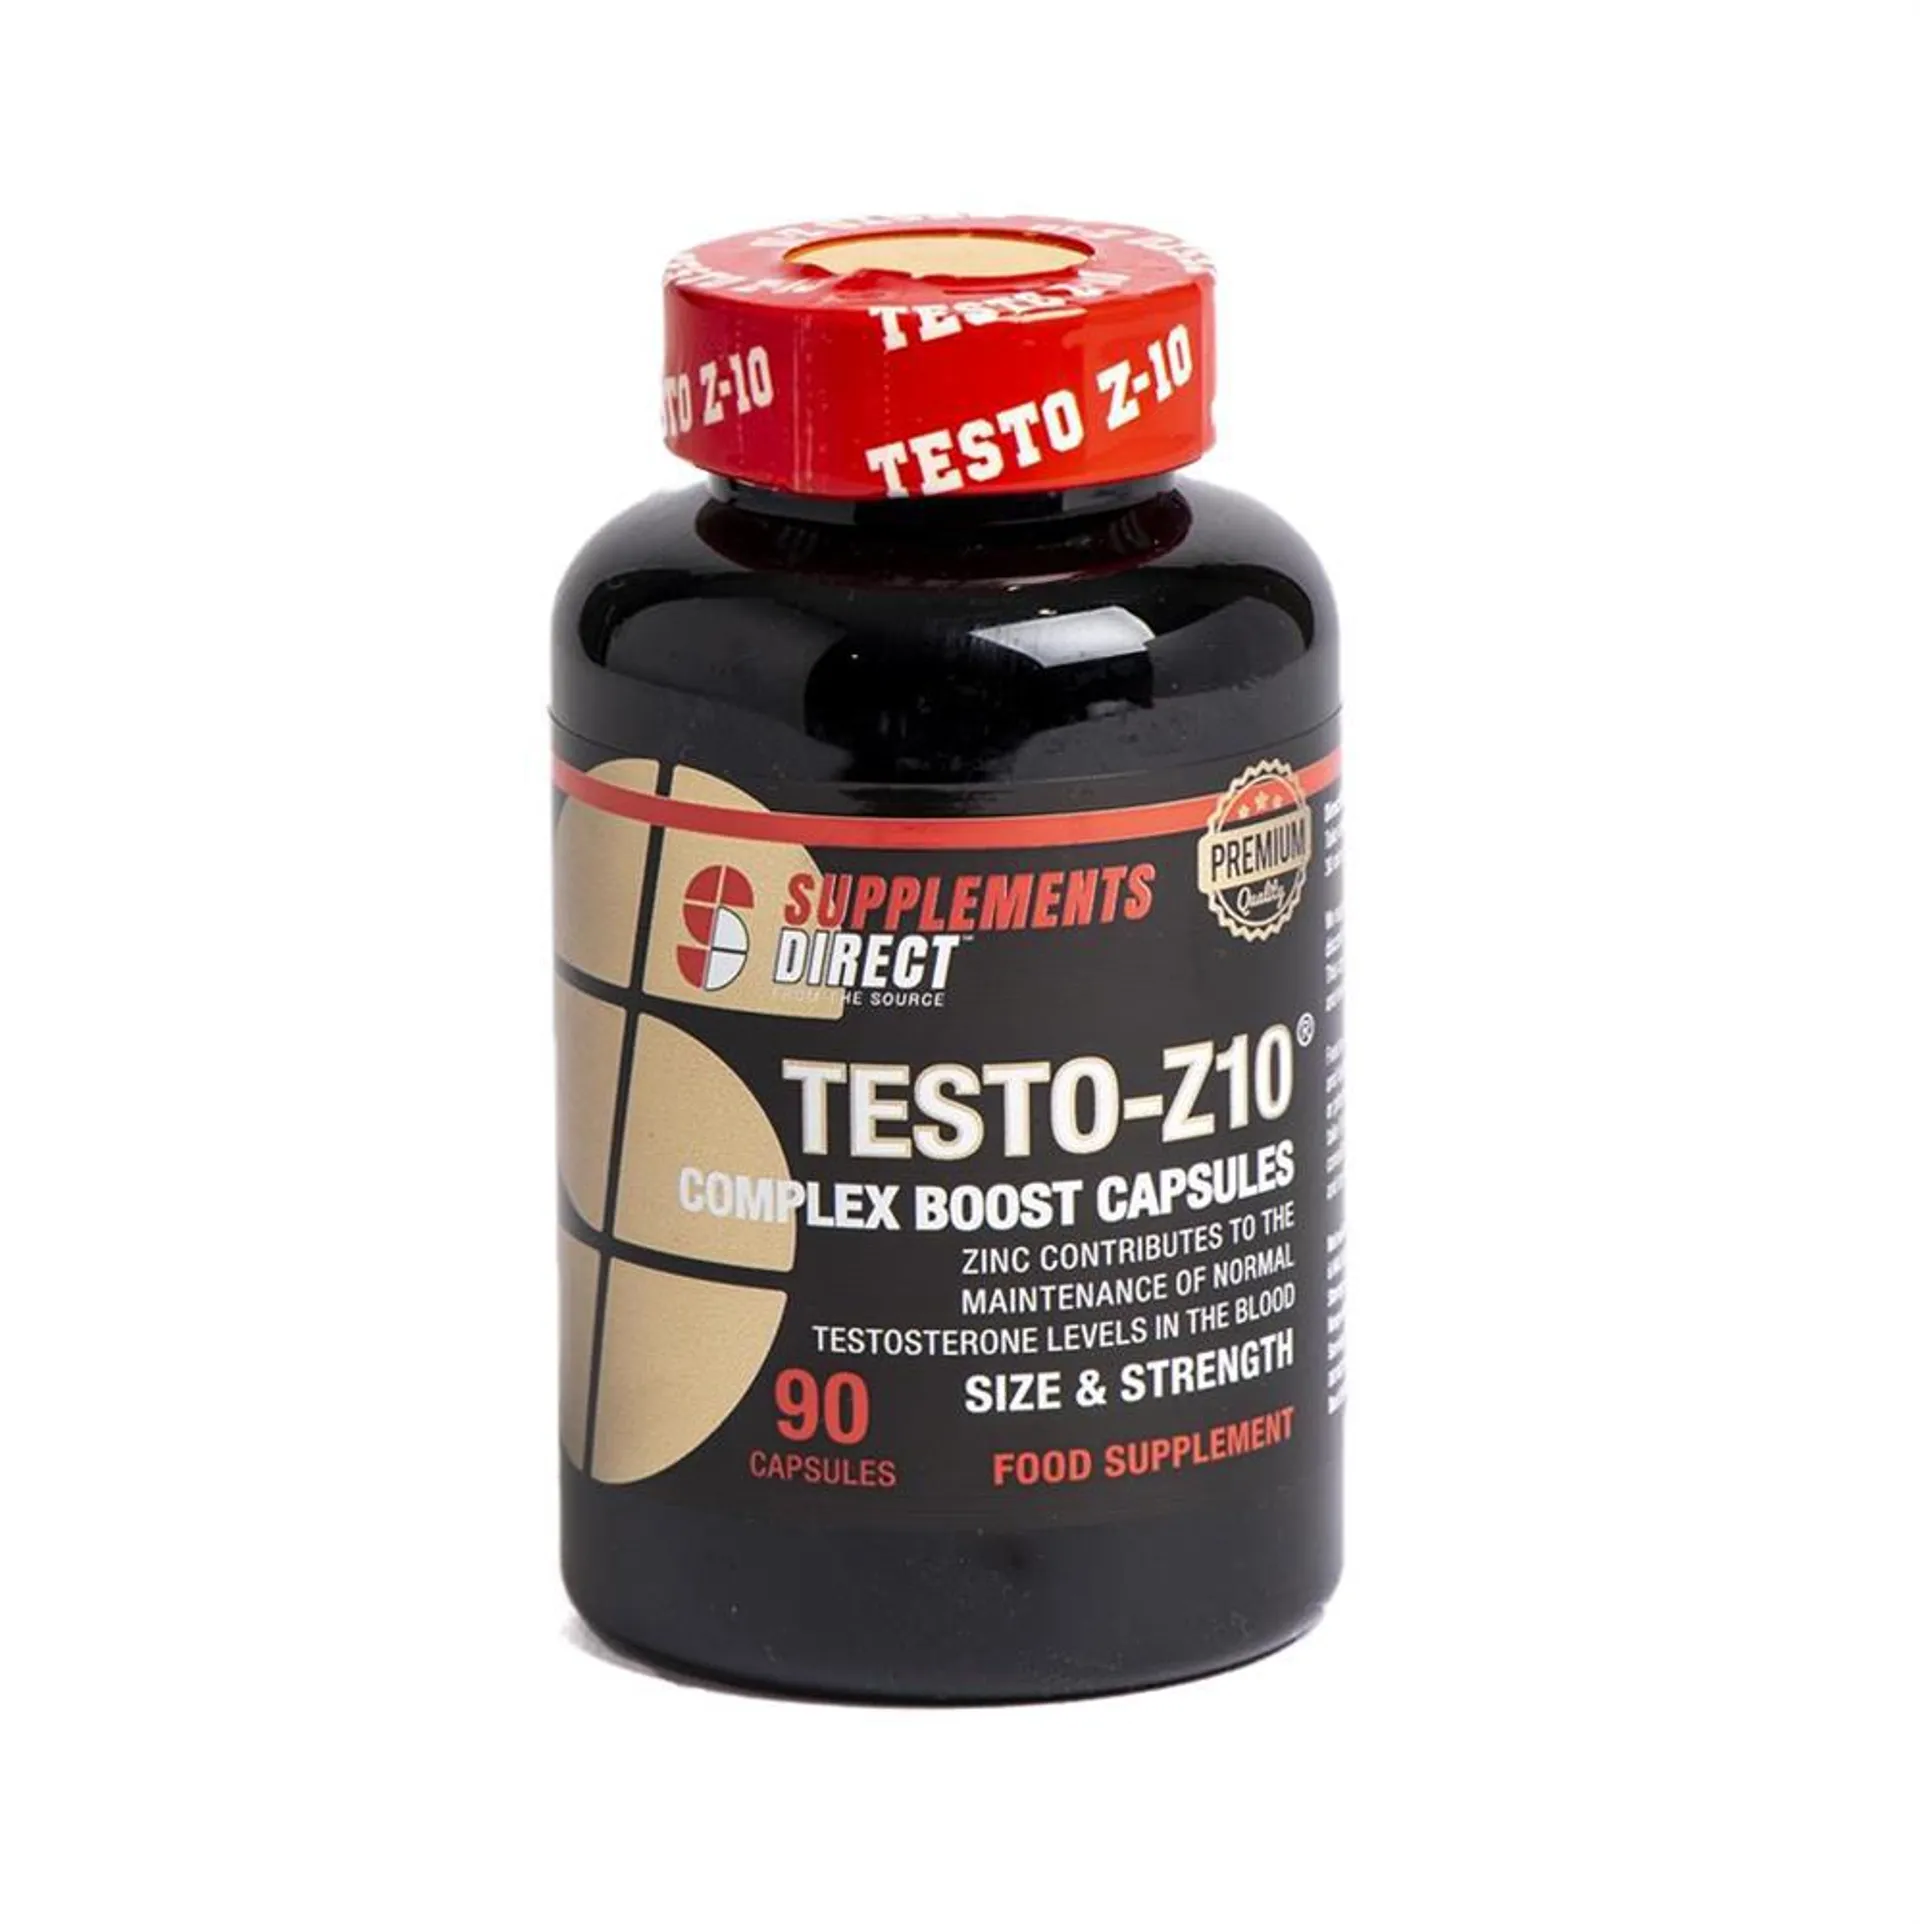 Supplements Direct Testo-Z10 Complex Boost - 90 Capsules